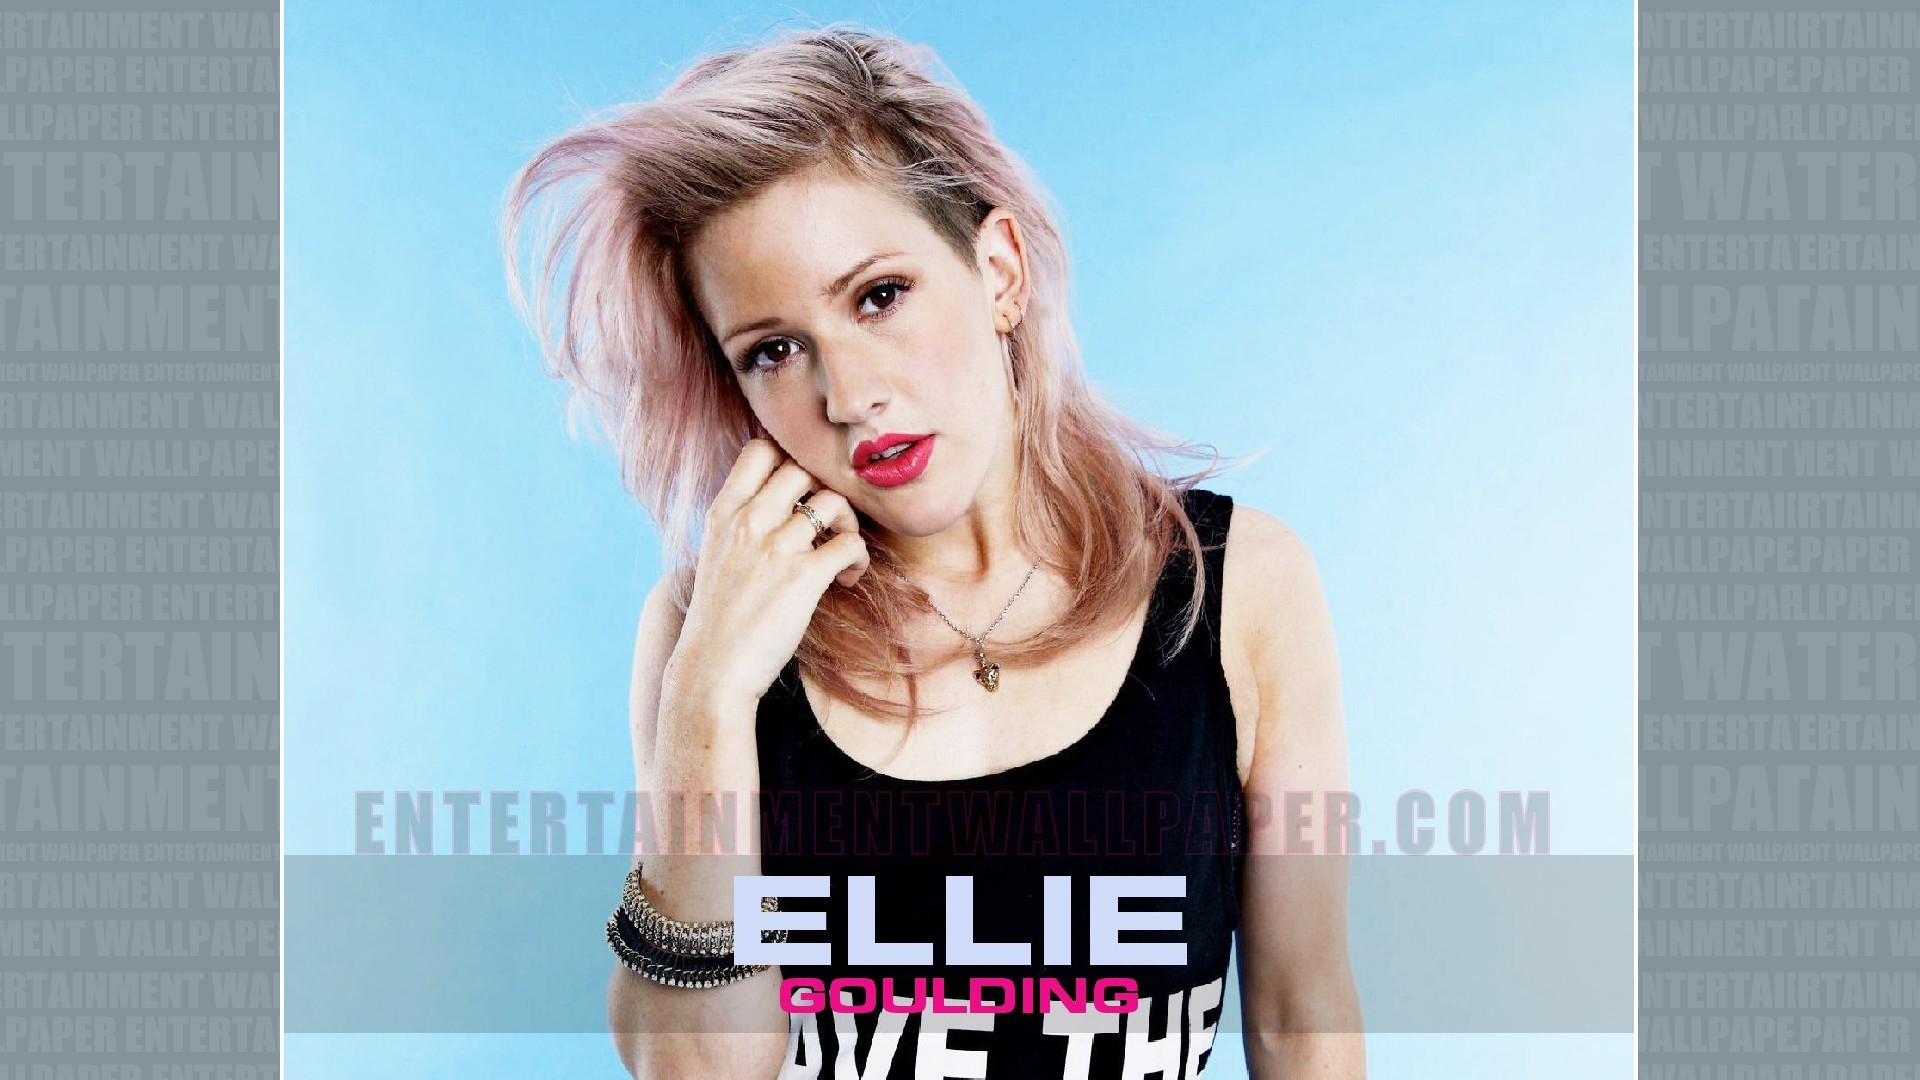 Ellie Goulding Wallpaper – Original size, download now